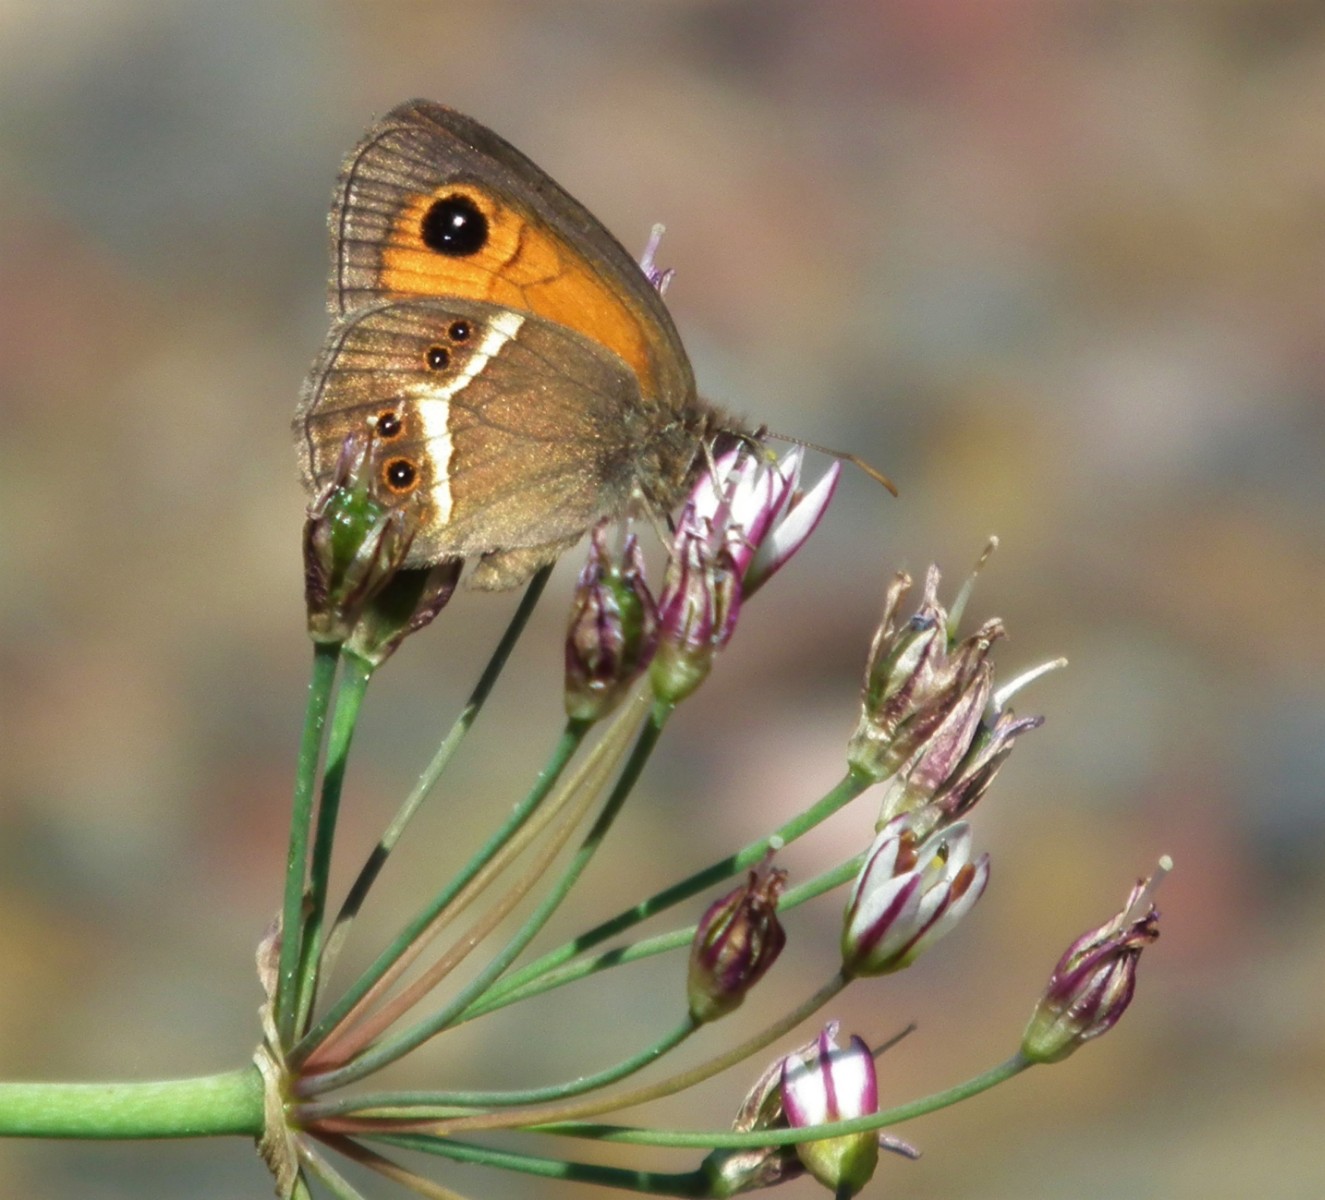 Common Buckeye butterfly